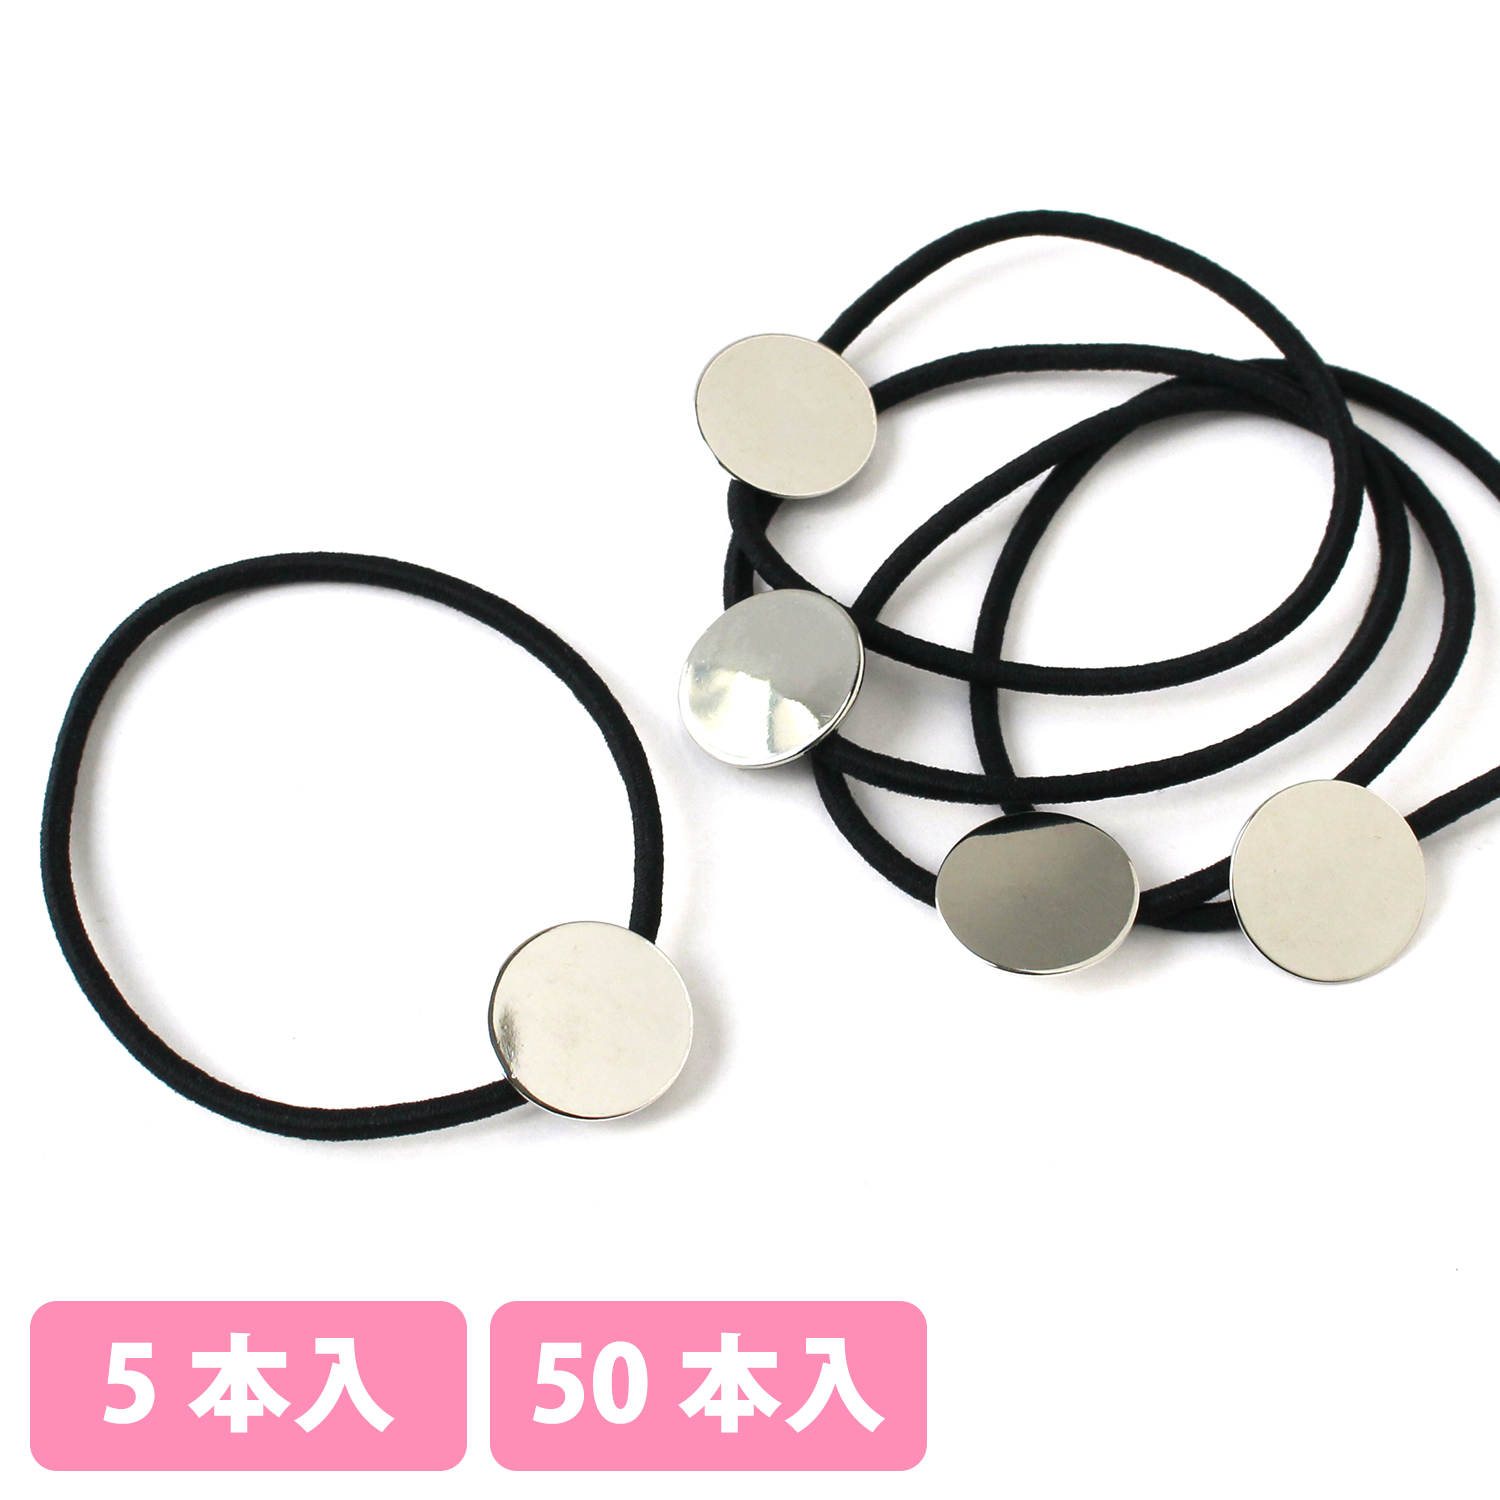 A5-46 Hair tie with bezel (18mm diameter) (pack)